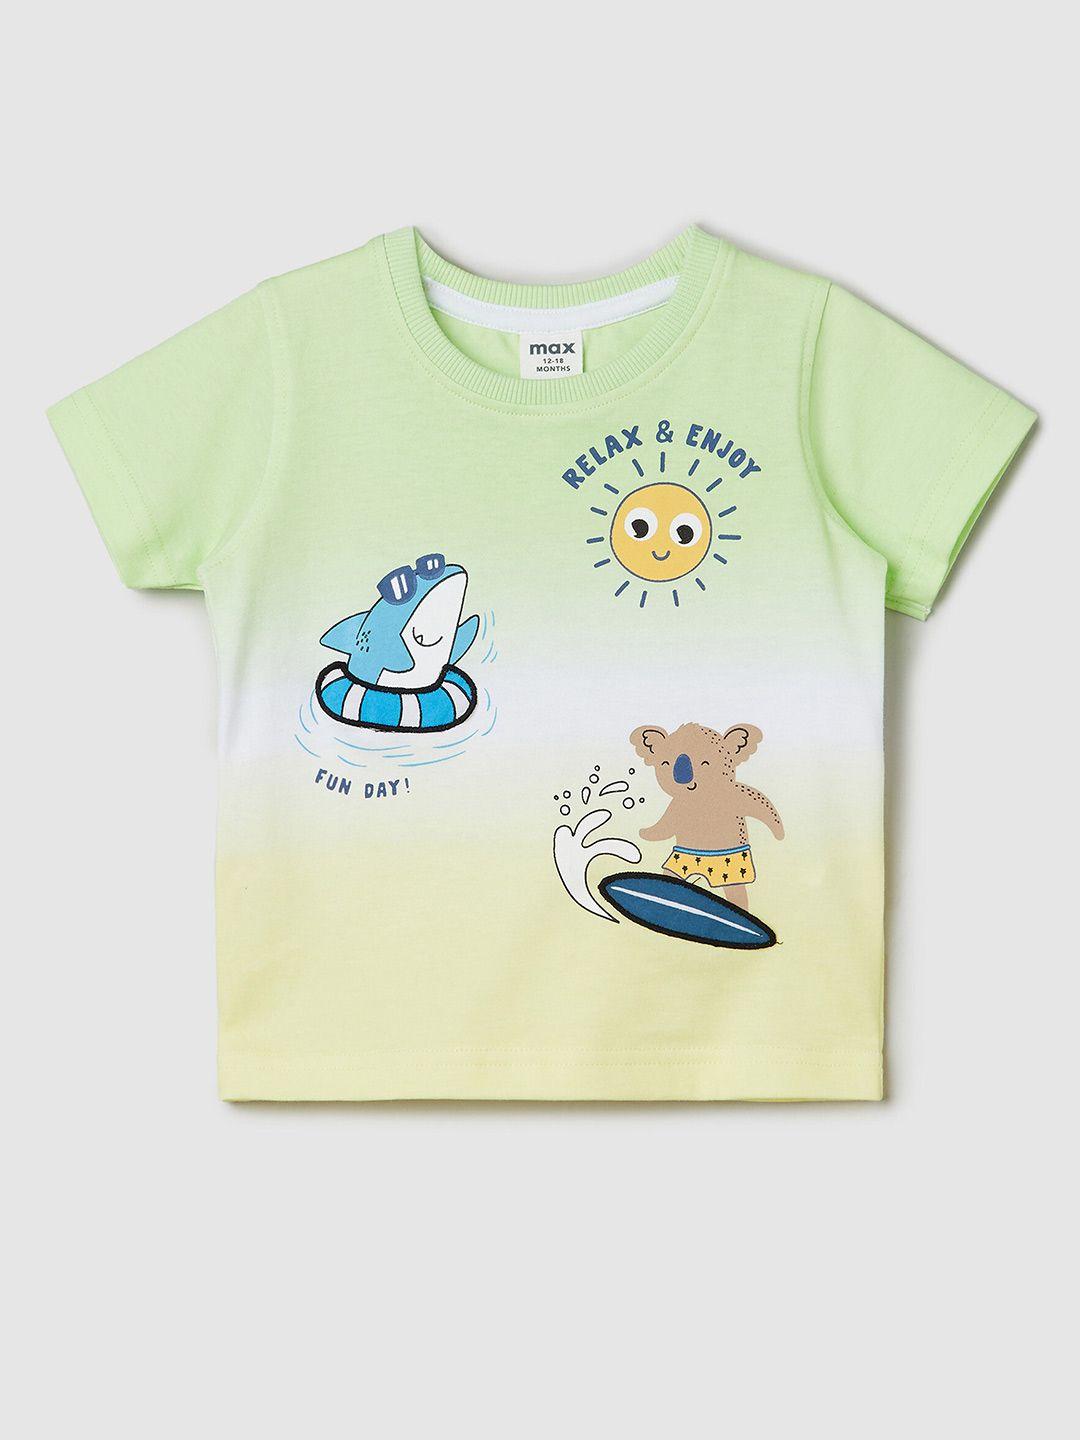 max-boys-conversational-printed-round-neck-pure-cotton-t-shirt